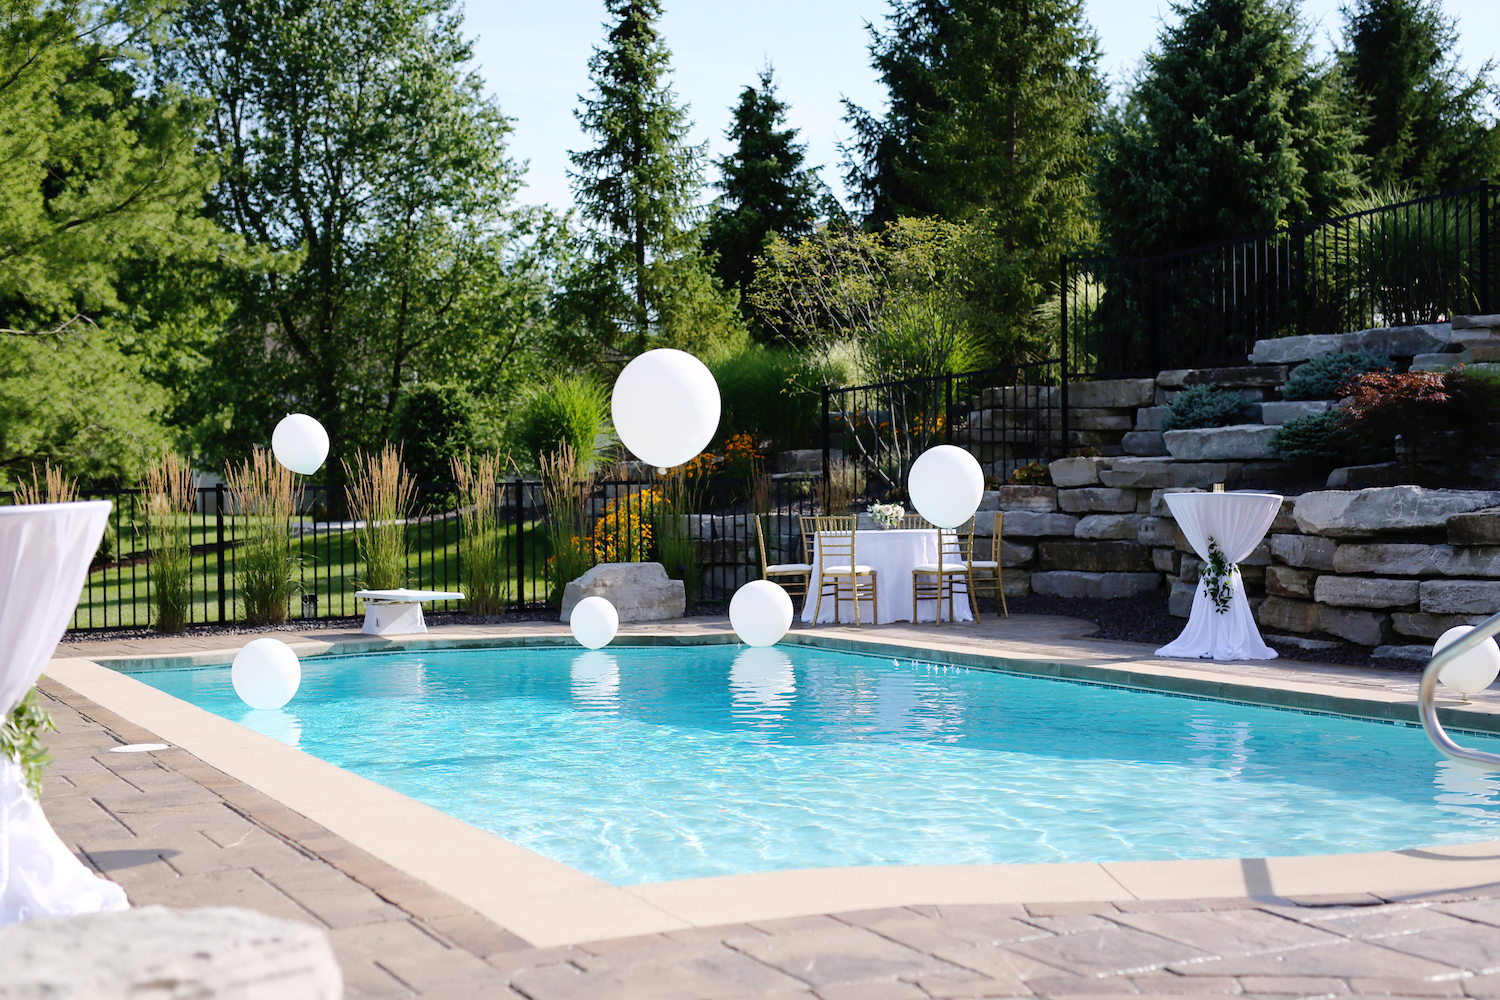 Pool with balloons before kalamazoo michigan wedding